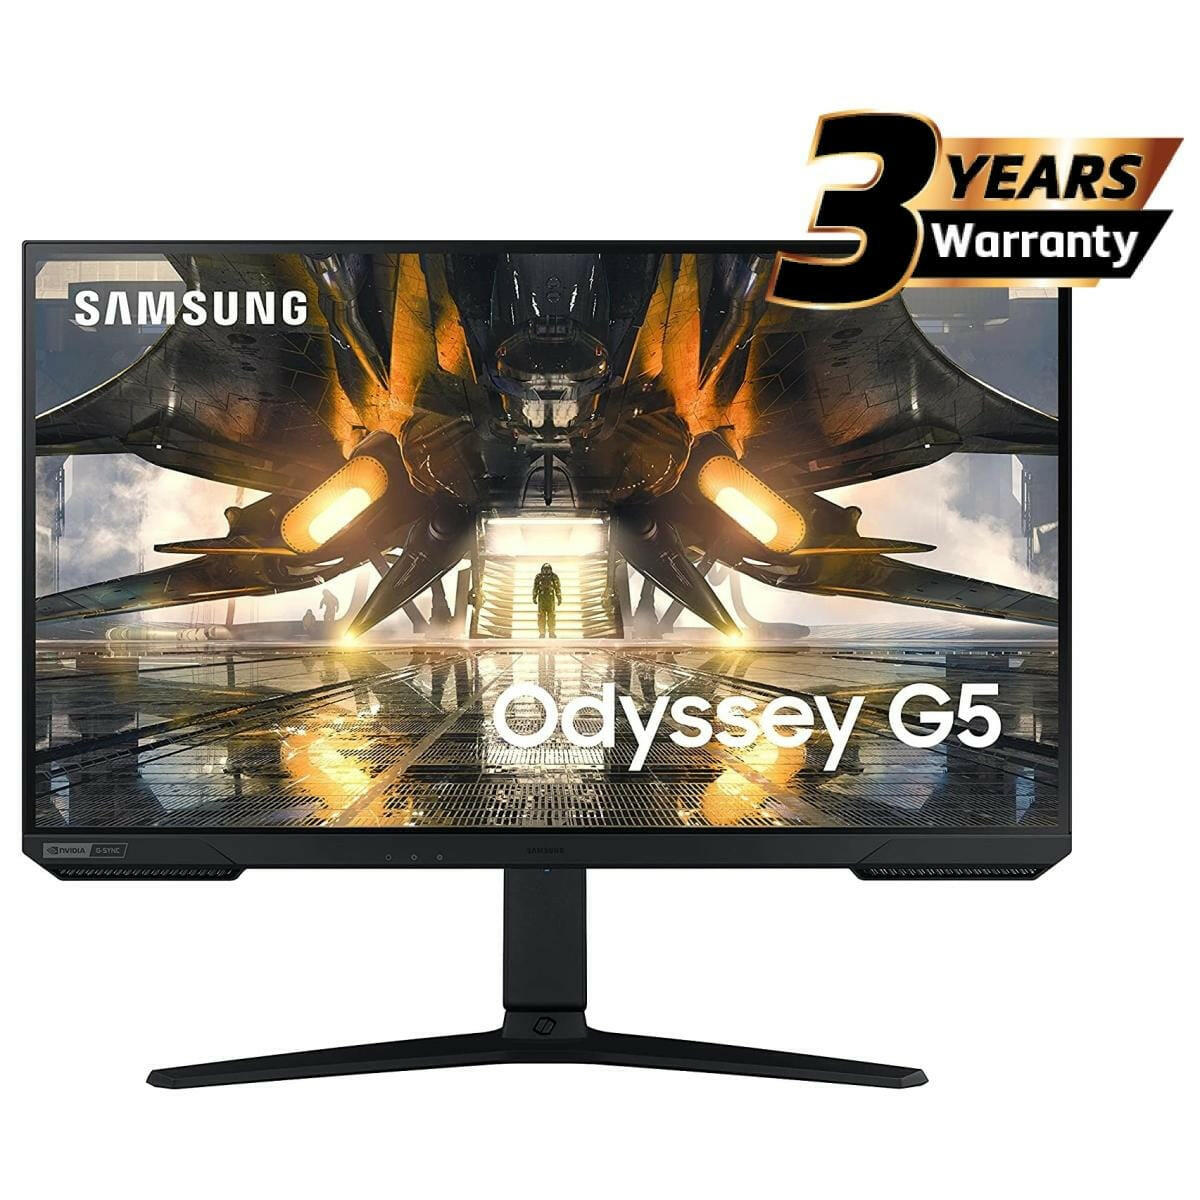 SAMSUNG Computer Monitors Samsung Odyssey G5 (AG504), 32" Flat Monitor IPS 2K (2560 x 1440) 165Hz 1ms(GTG), HDR10, 99% sRGB, 10Bit, G-Sync Compatible w/ Ergonomic Stand